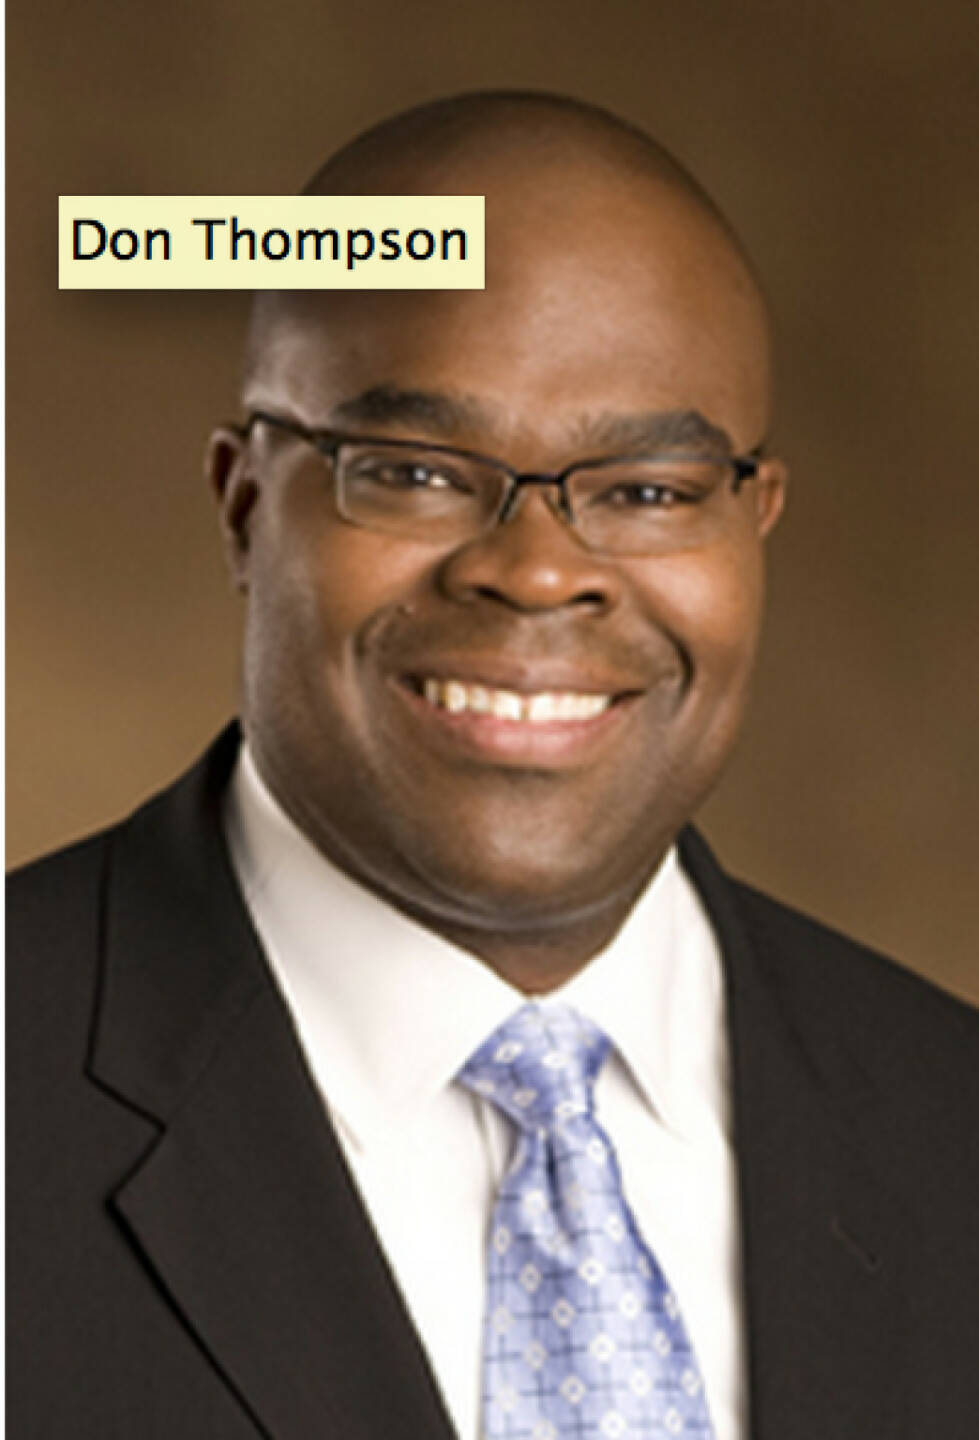 Don Thompson - CEO, McDonalds